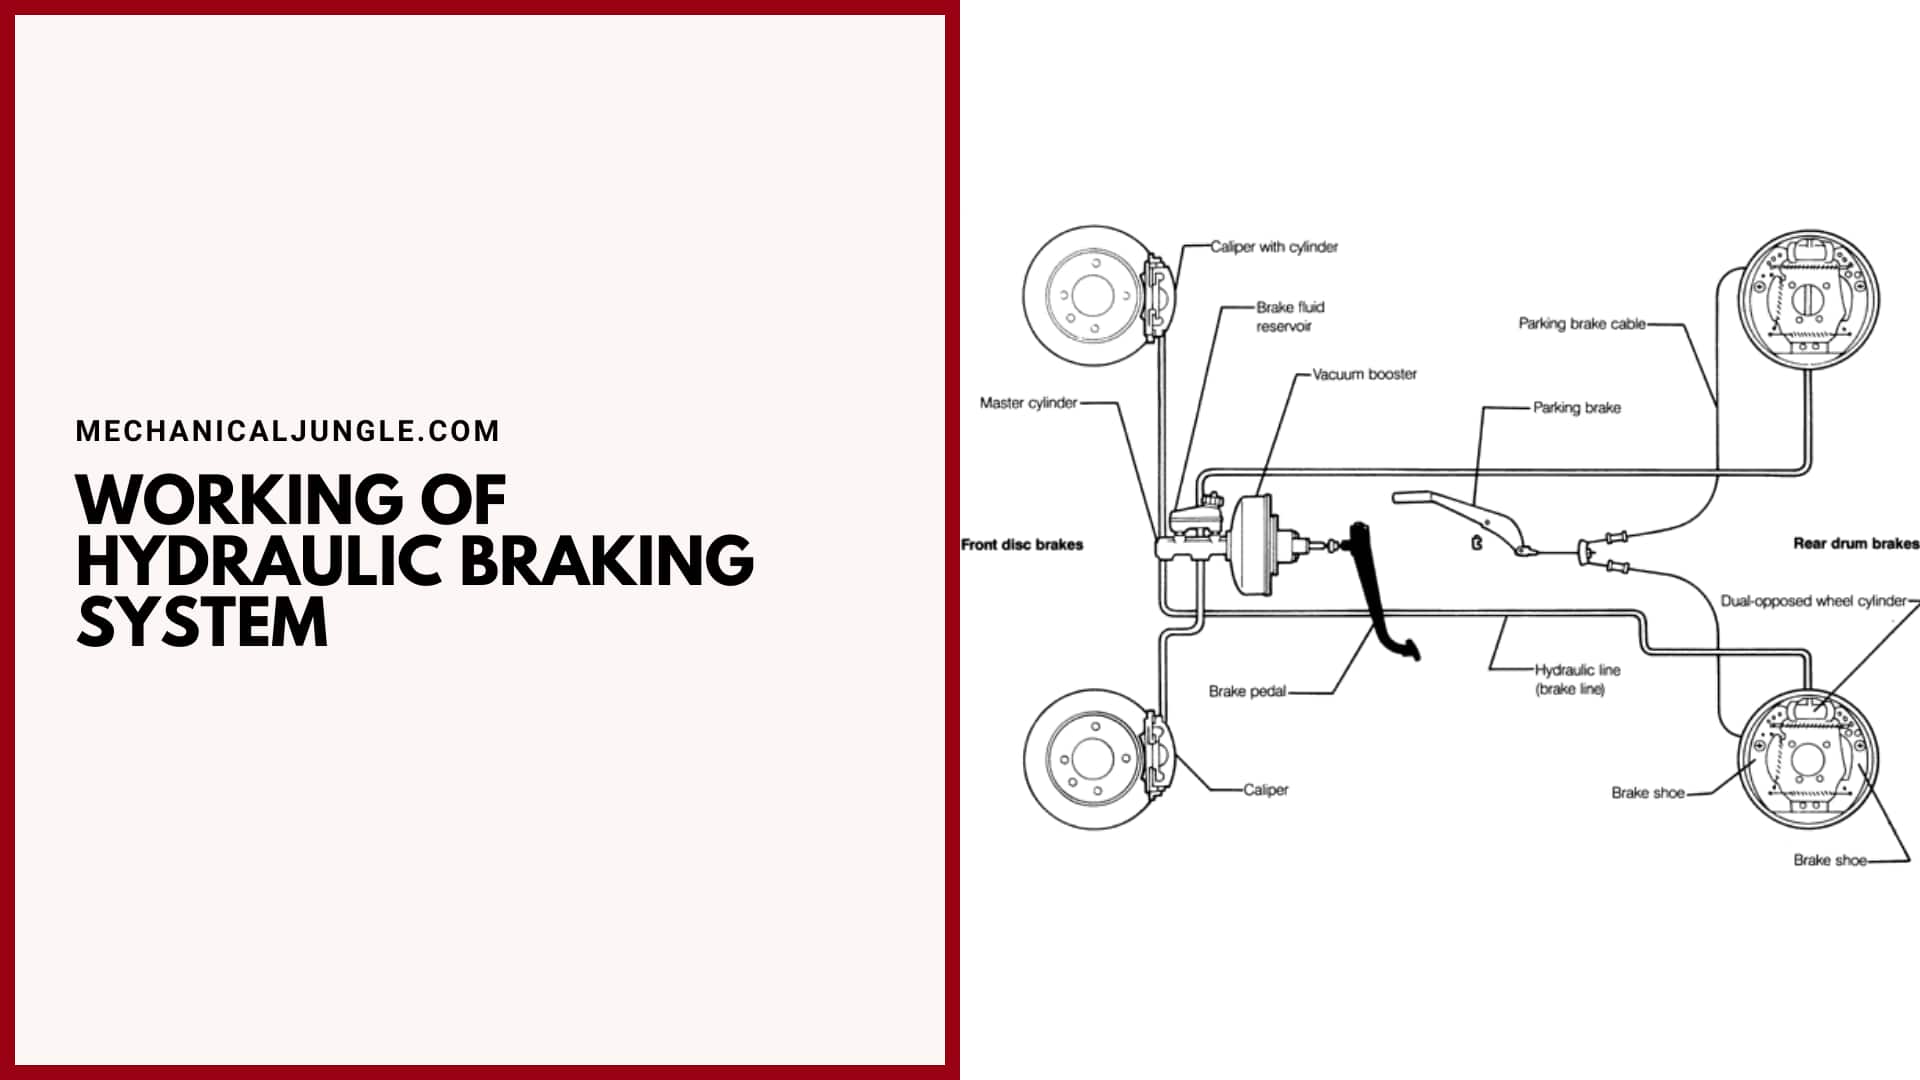 Working of Hydraulic Braking System